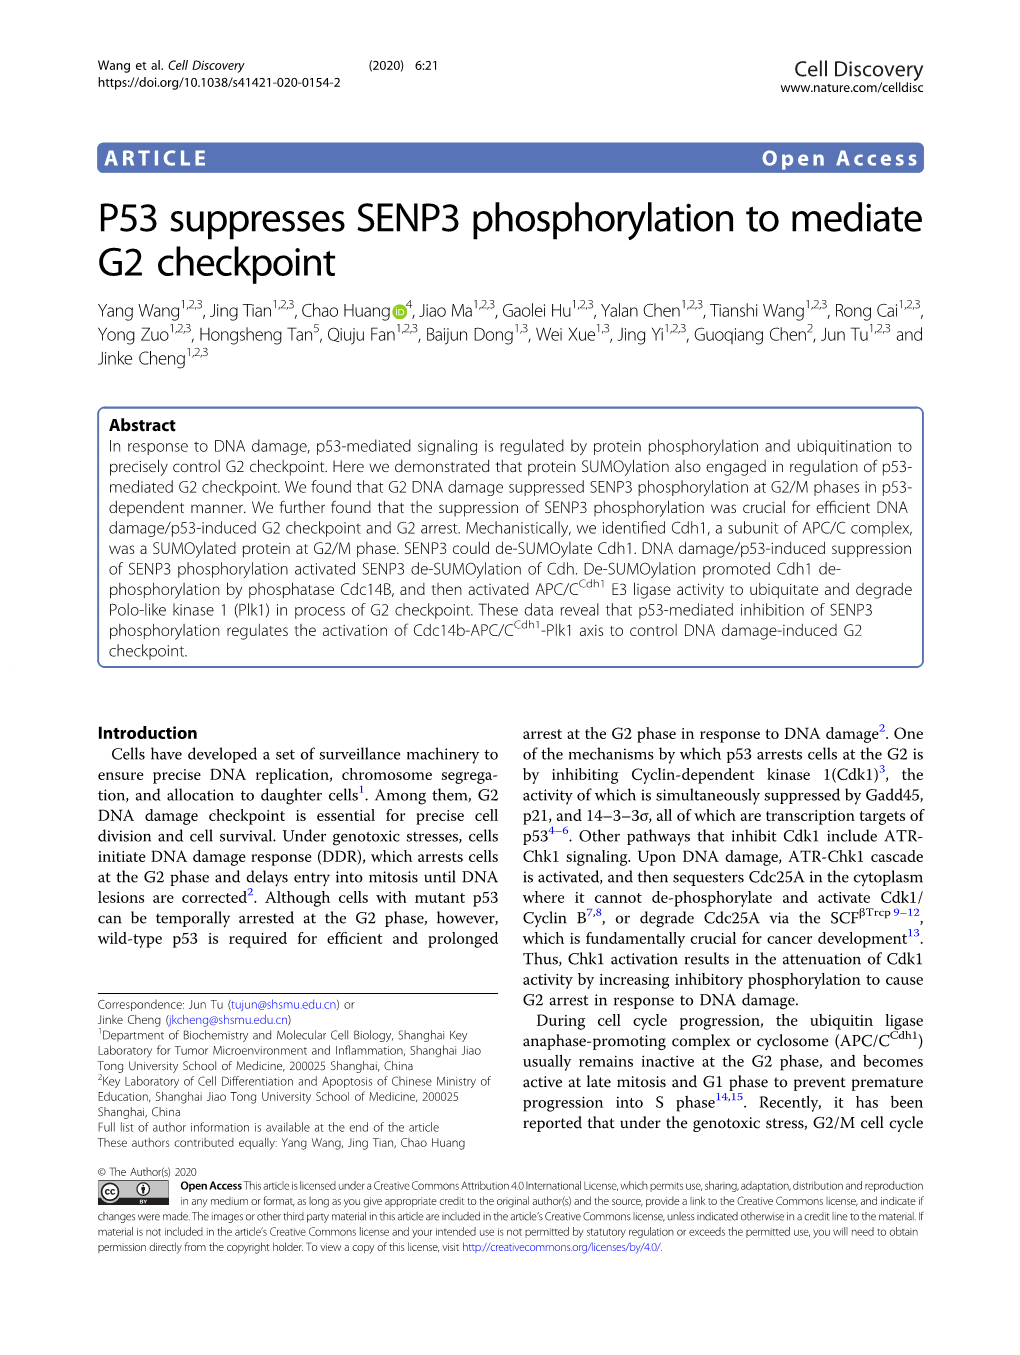 P53 Suppresses SENP3 Phosphorylation to Mediate G2